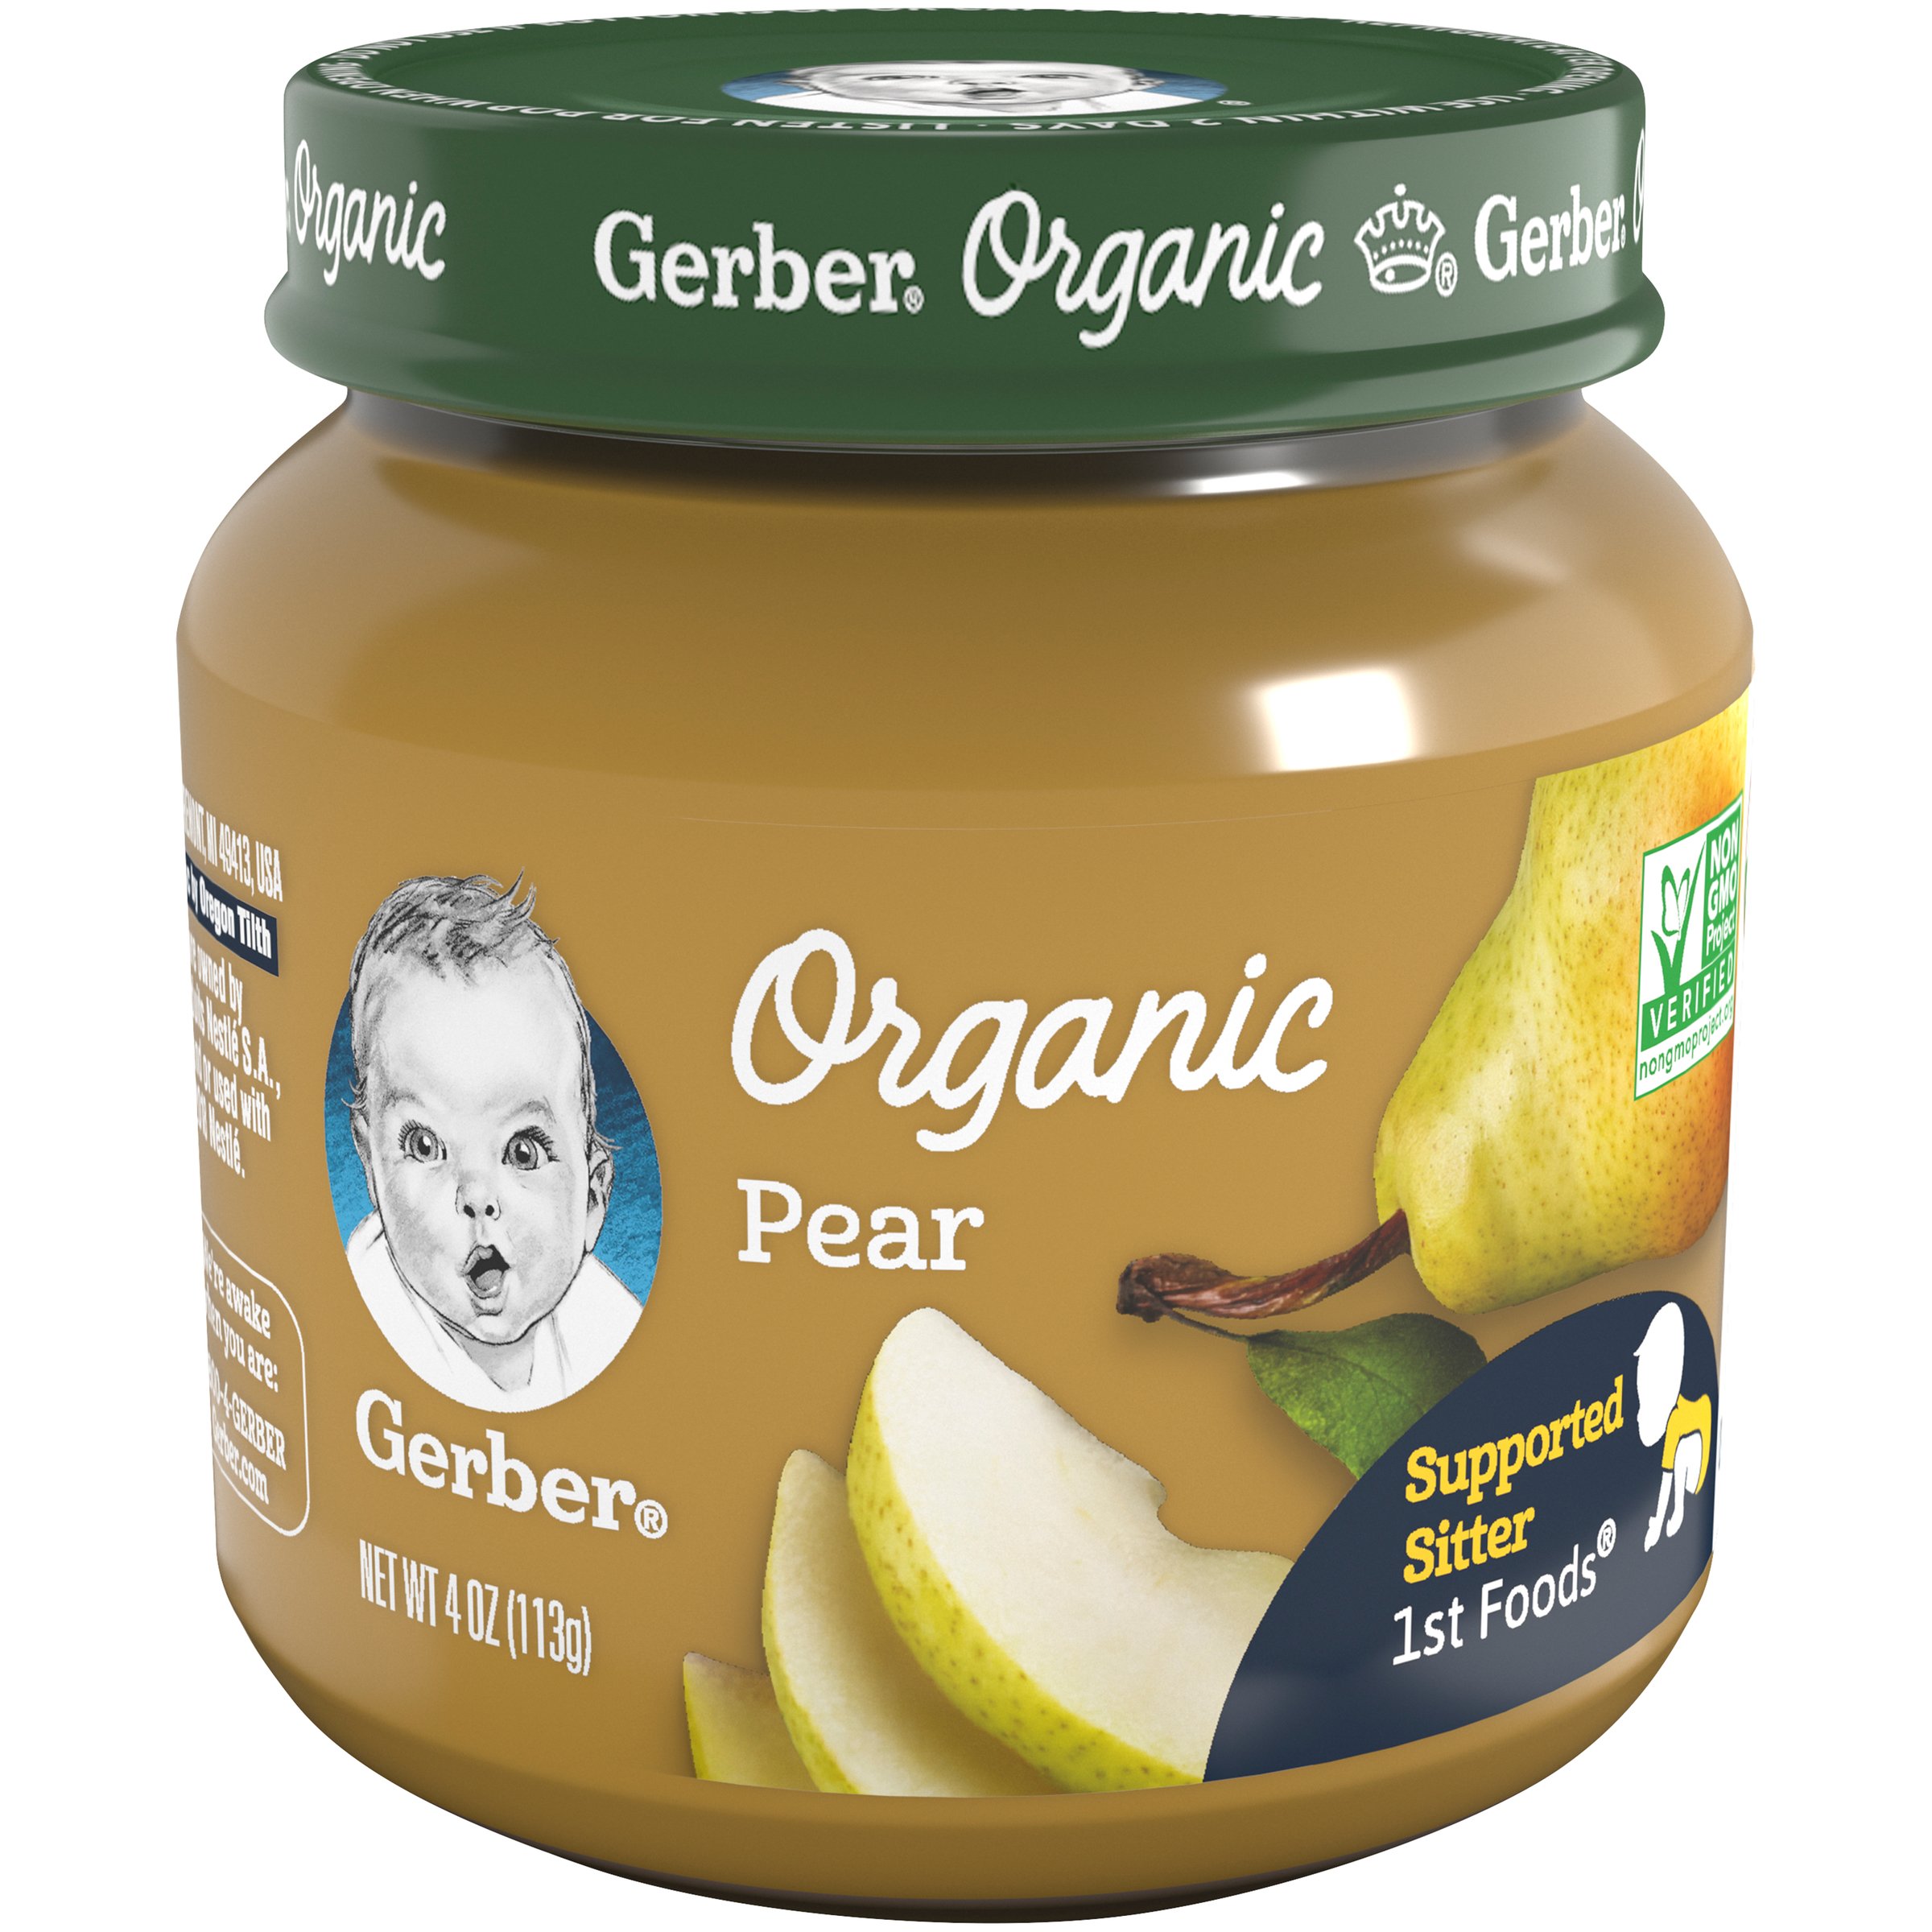 Gerber 1st Foods Organic Pear Baby Food - Shop Baby Food at H-E-B